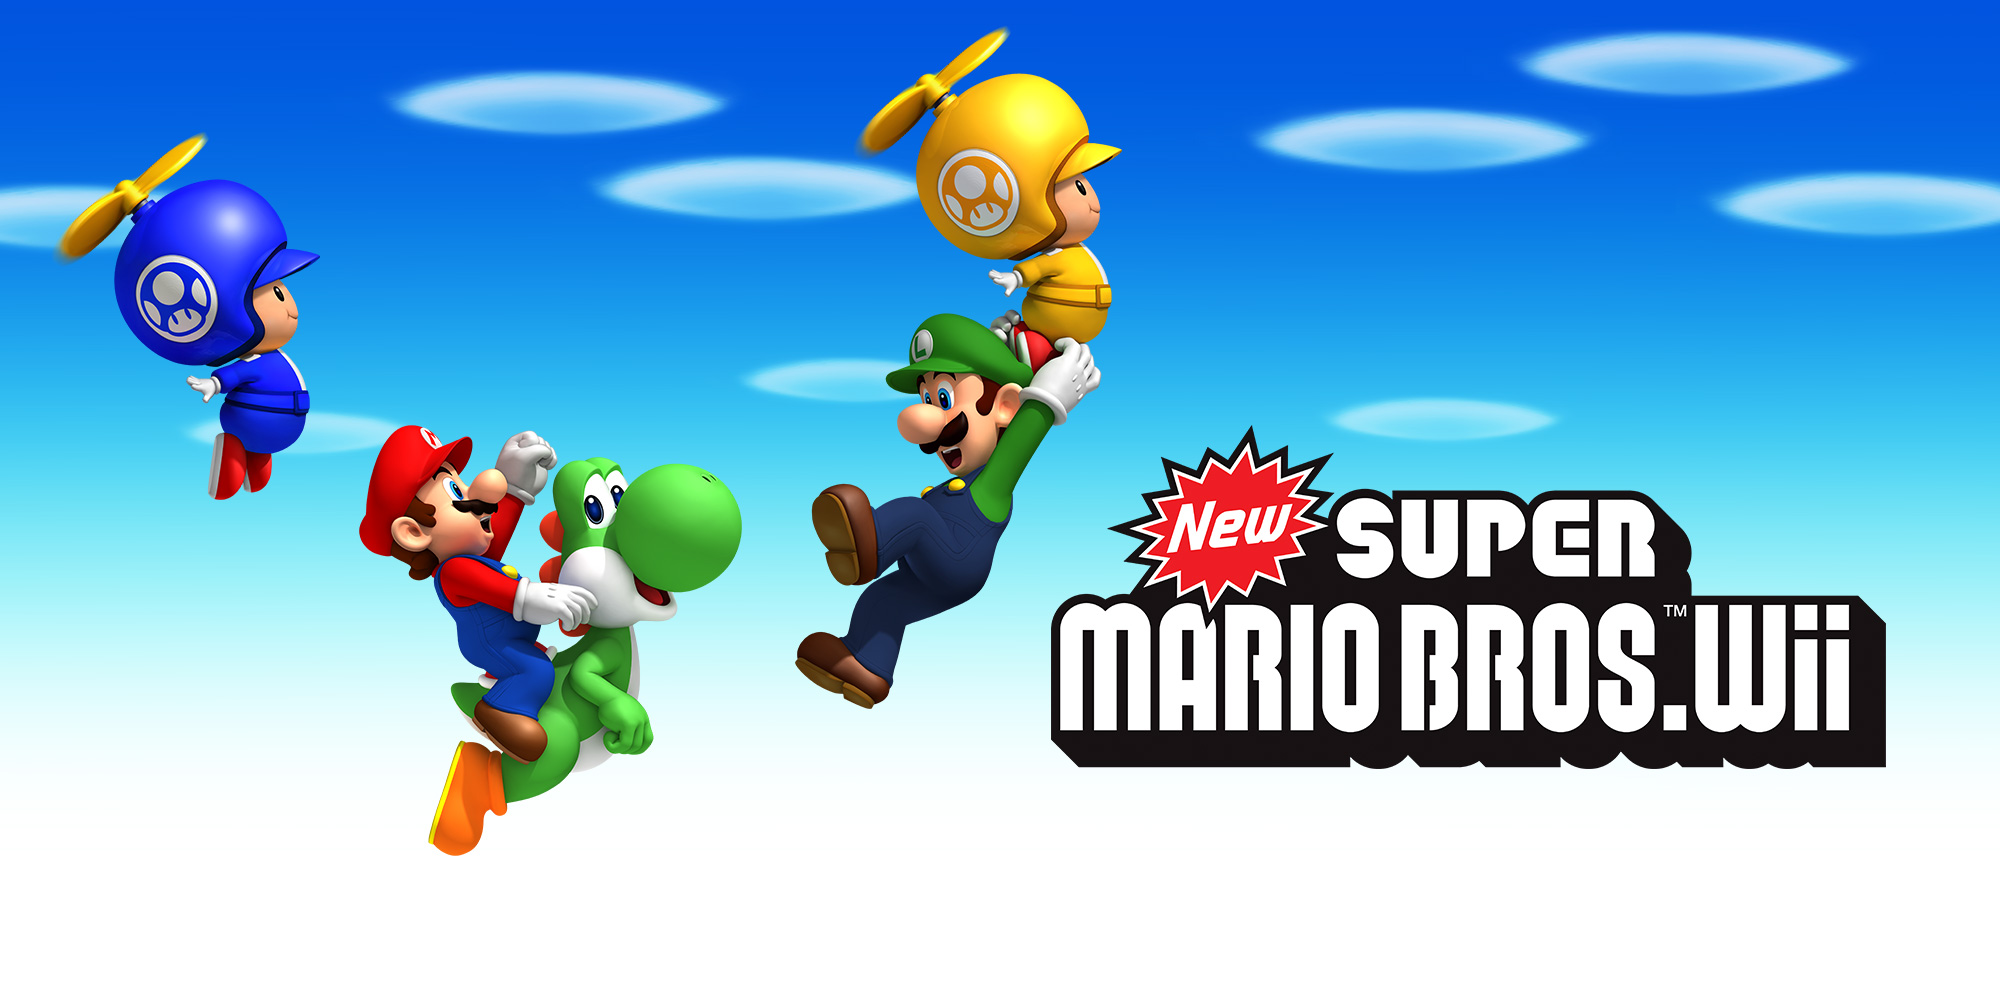 New Super Mario Bros. Wii. Wii